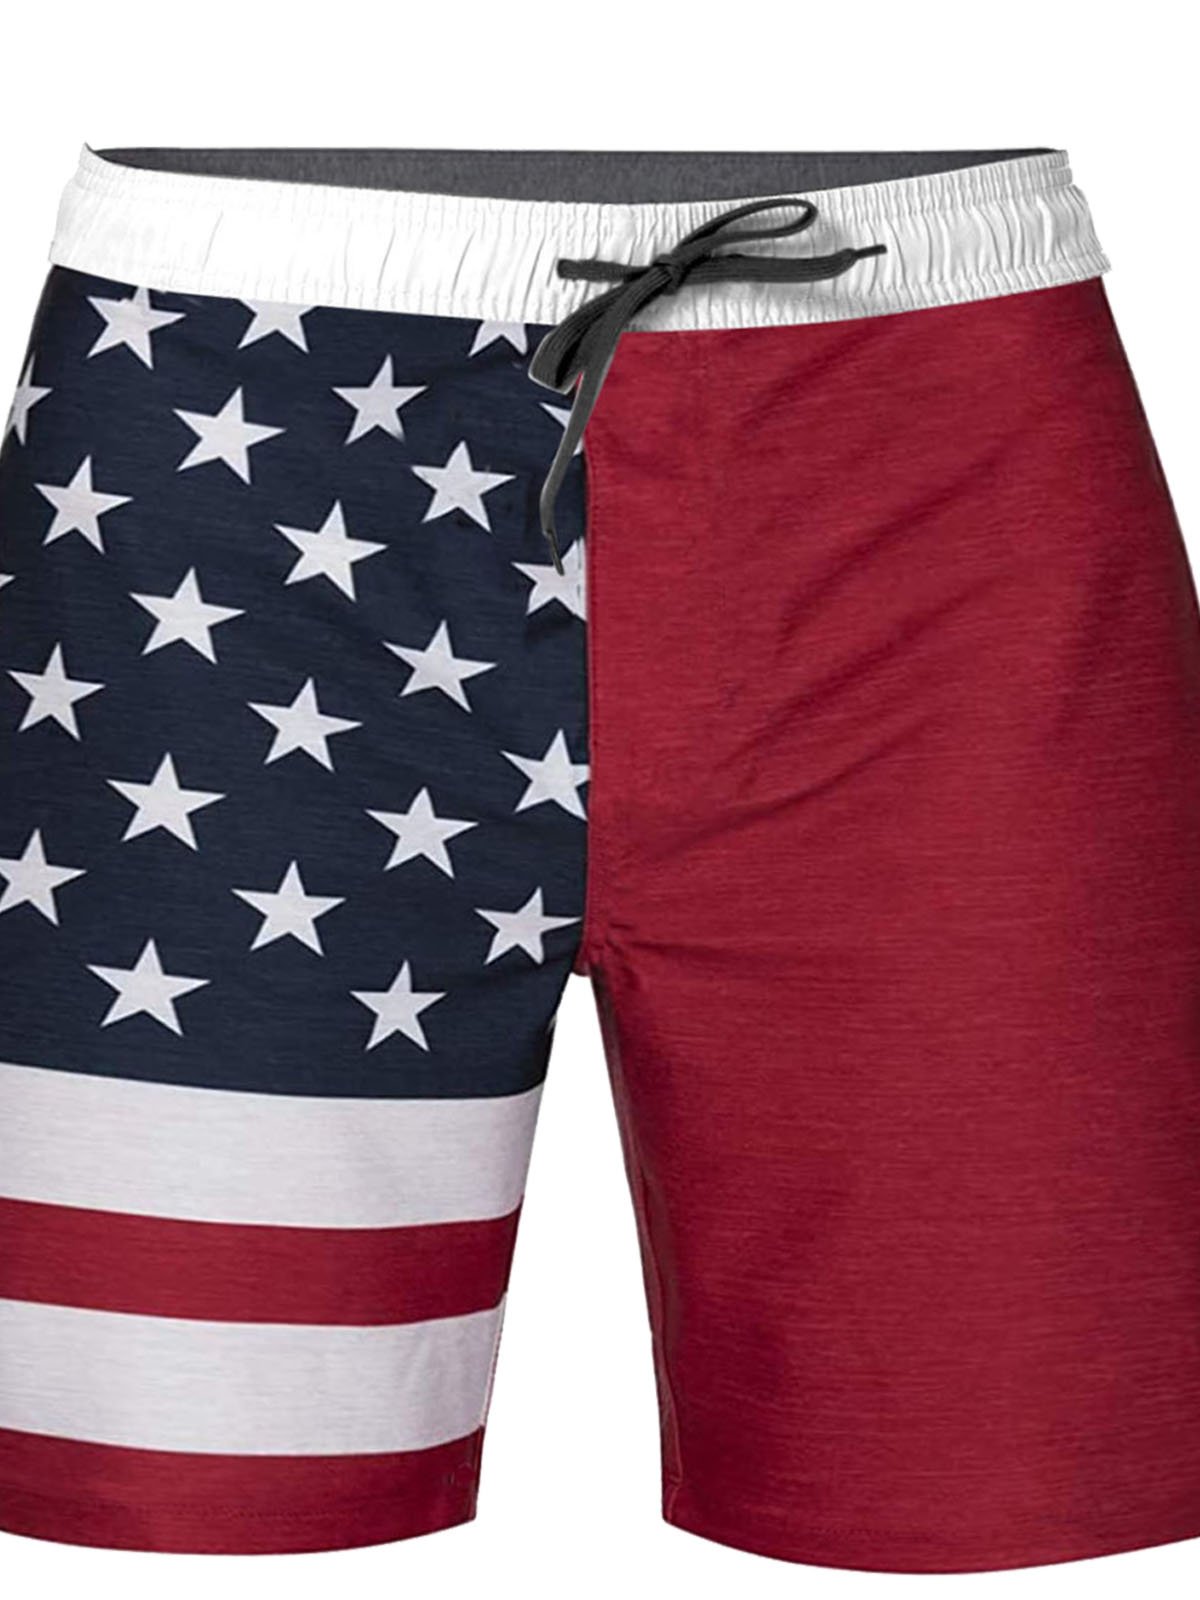 Flag Graphic Men's Casual Beach Shorts